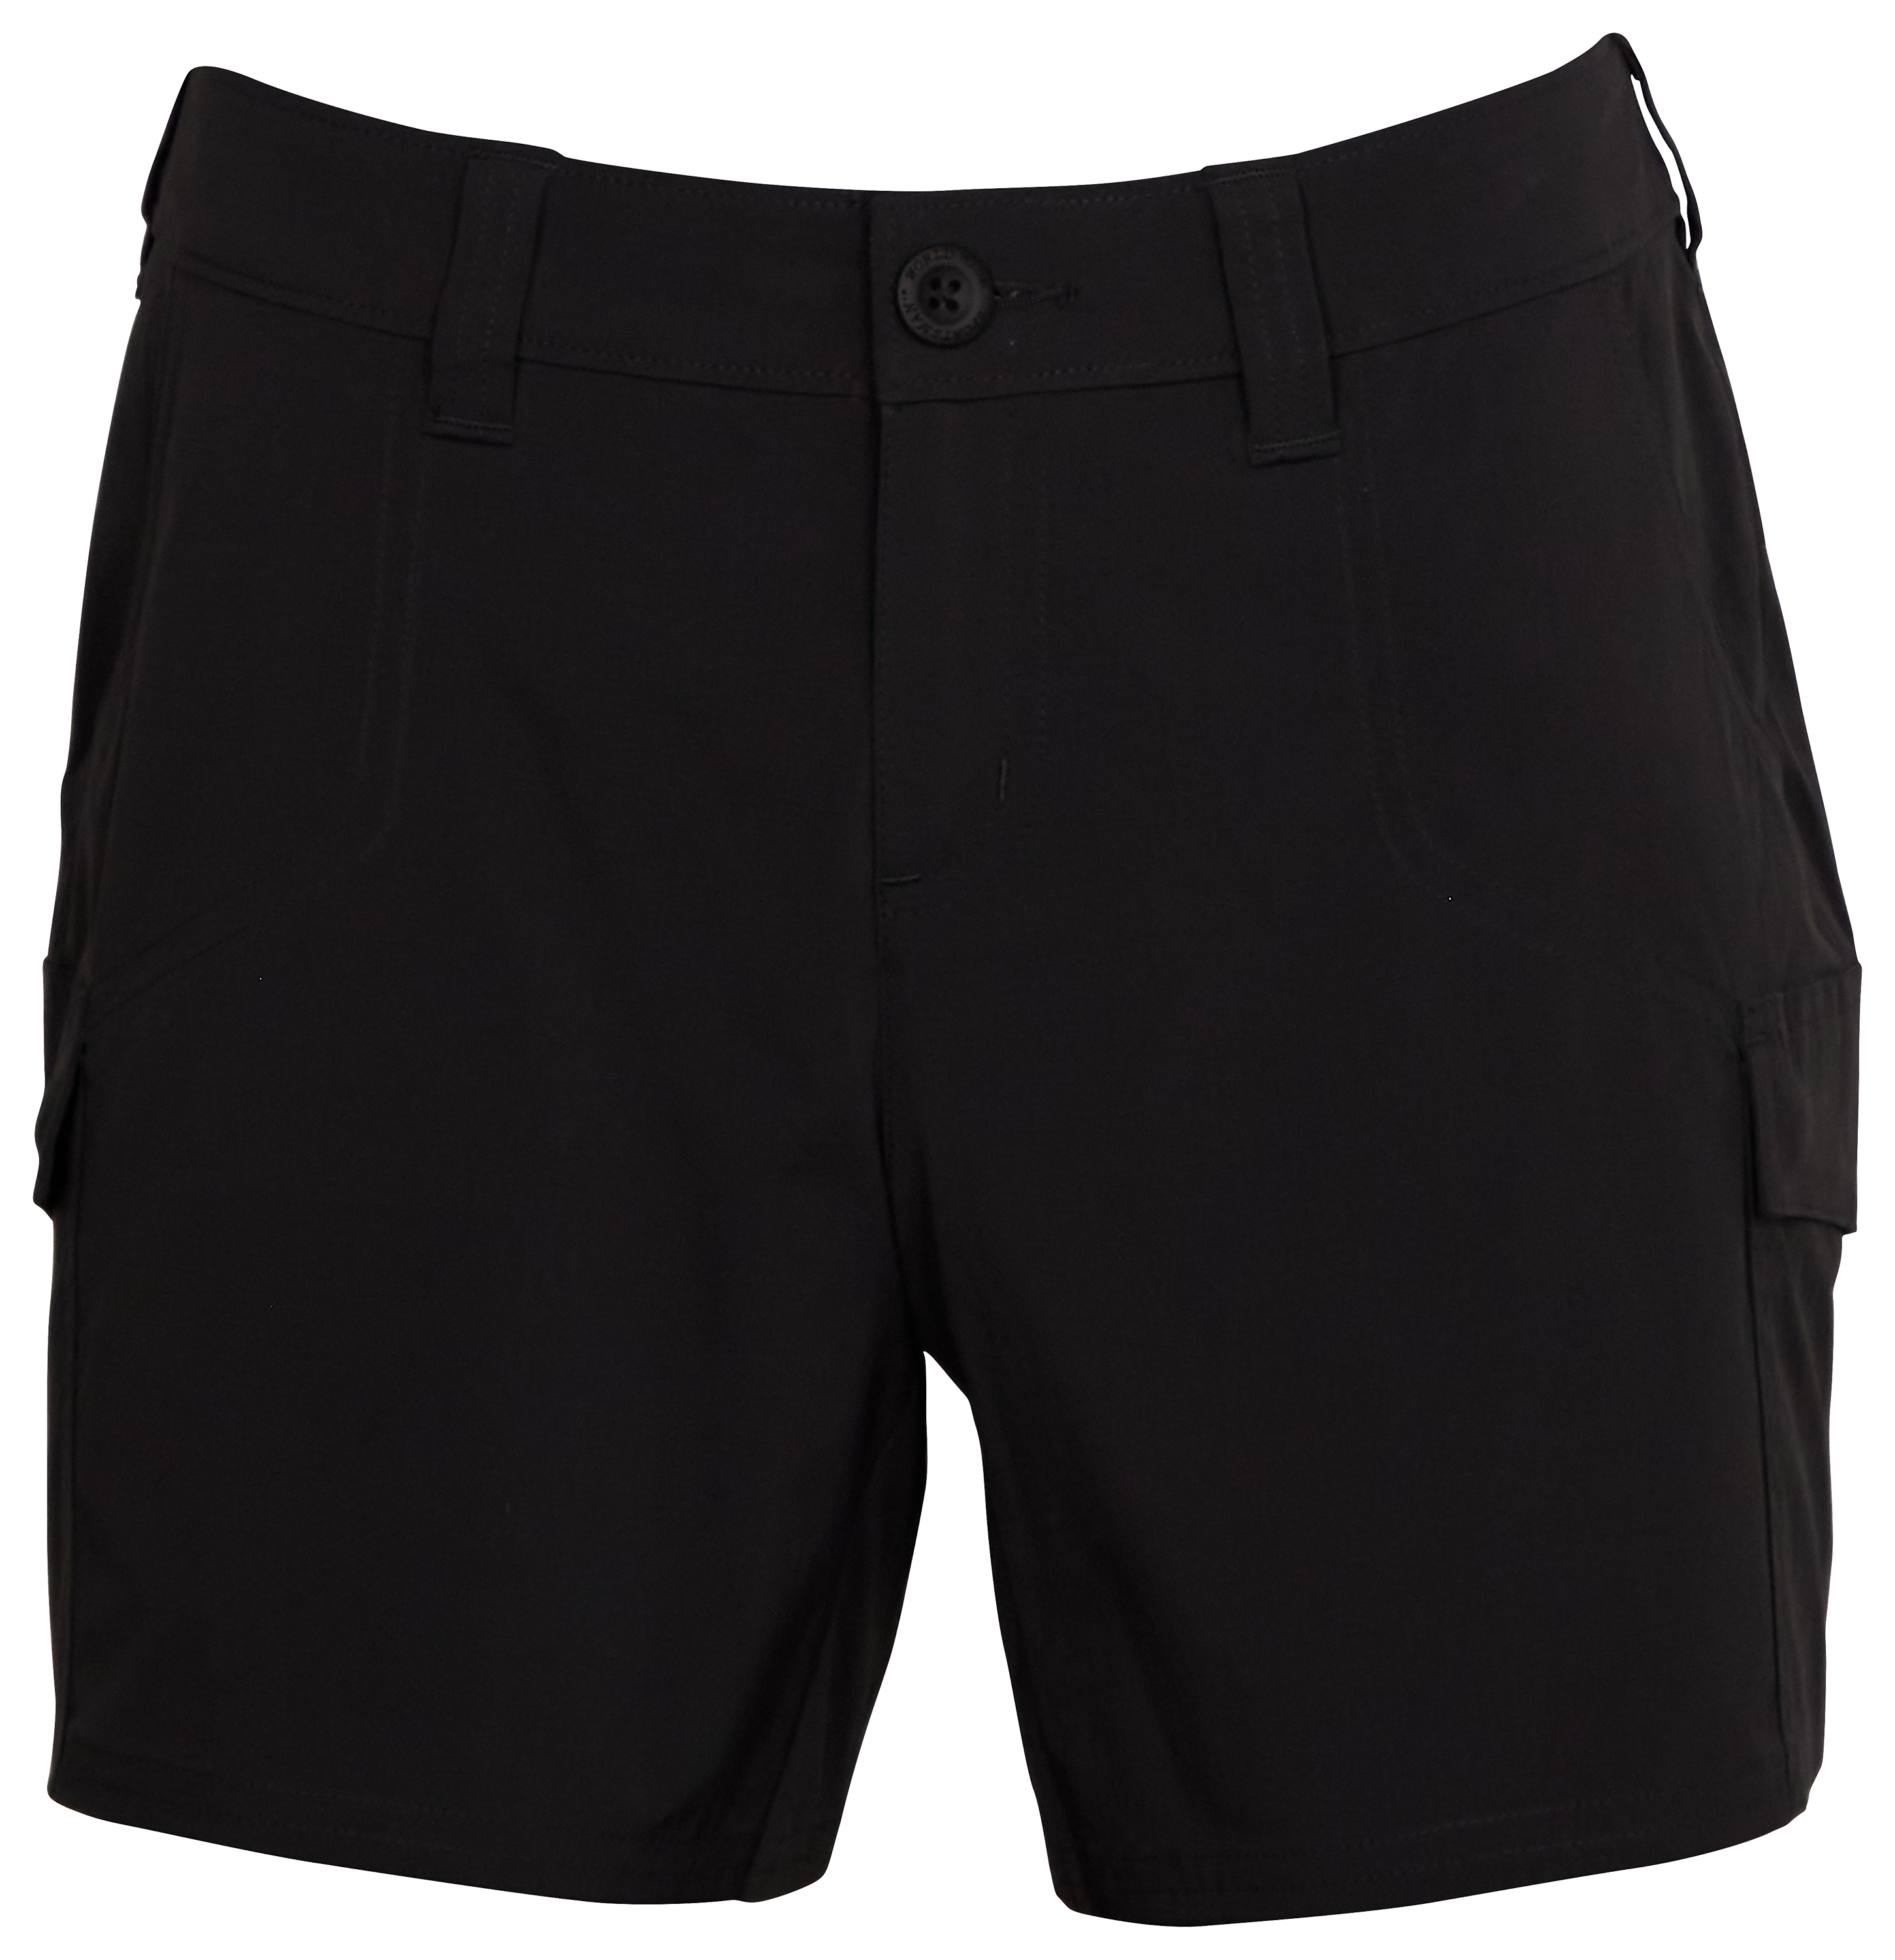 World Wide Sportsman Ripstop Cargo Shorts for Ladies - Jet Black - 12